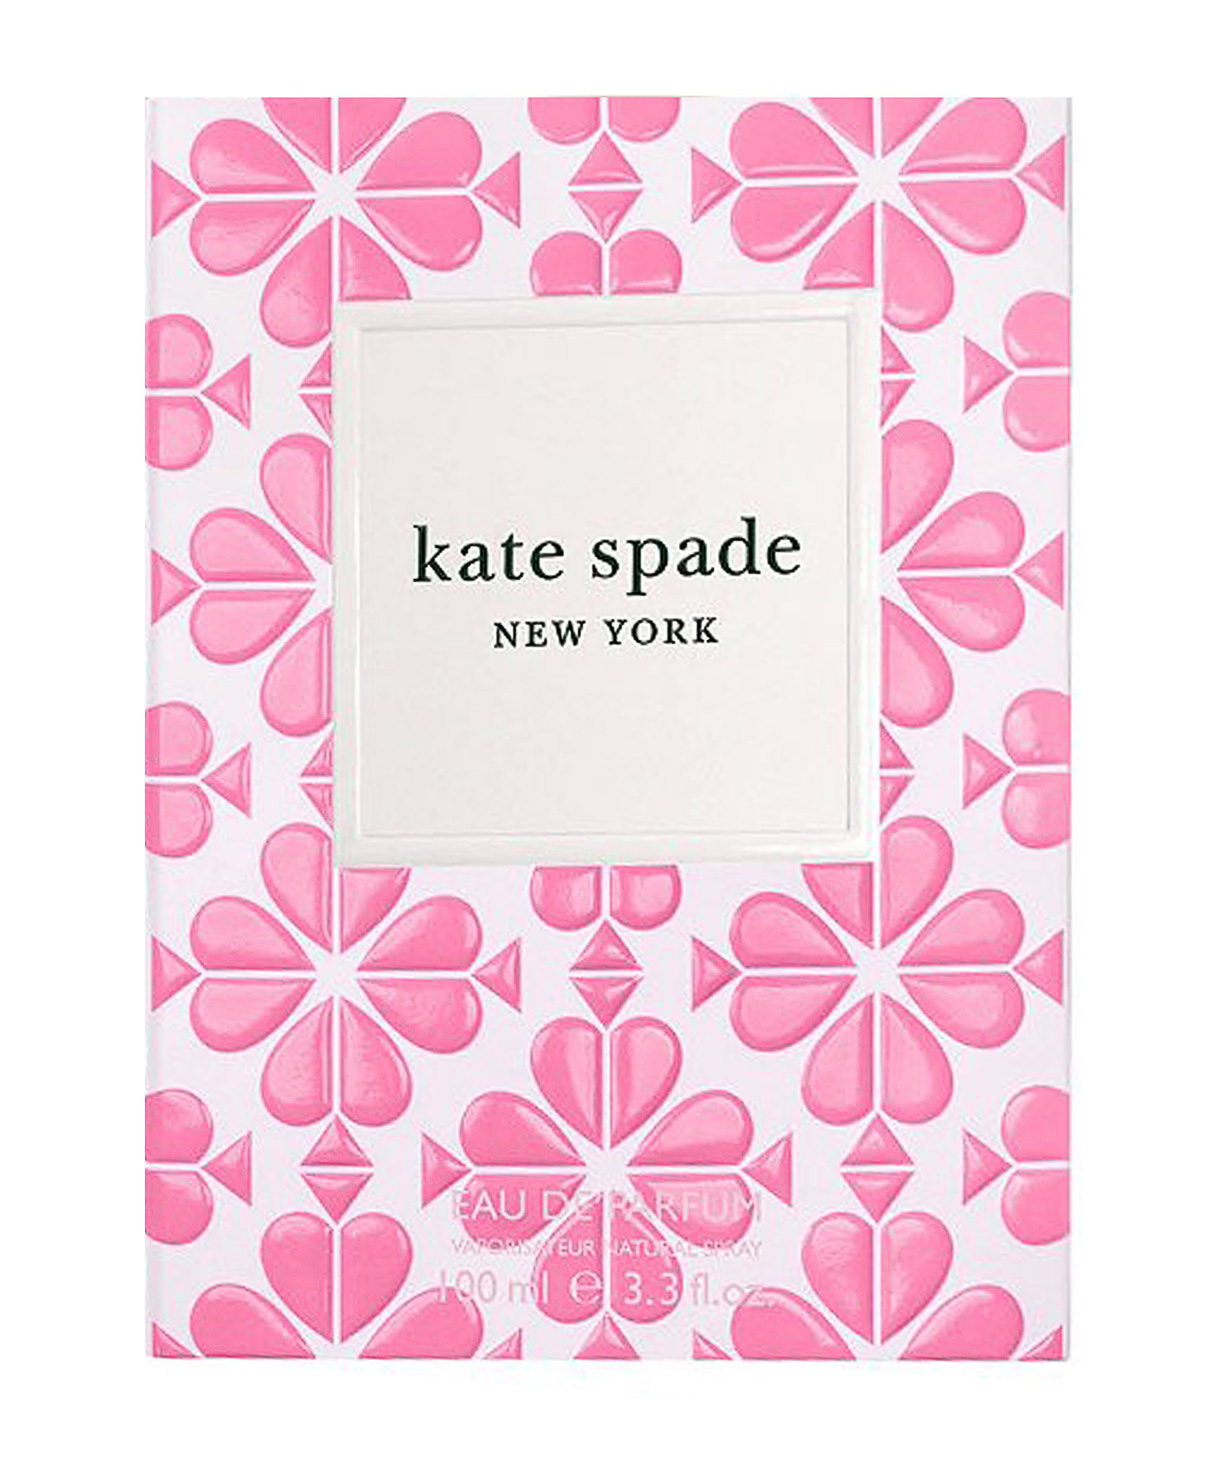 Perfume «Kate Spade» for women, 100 ml